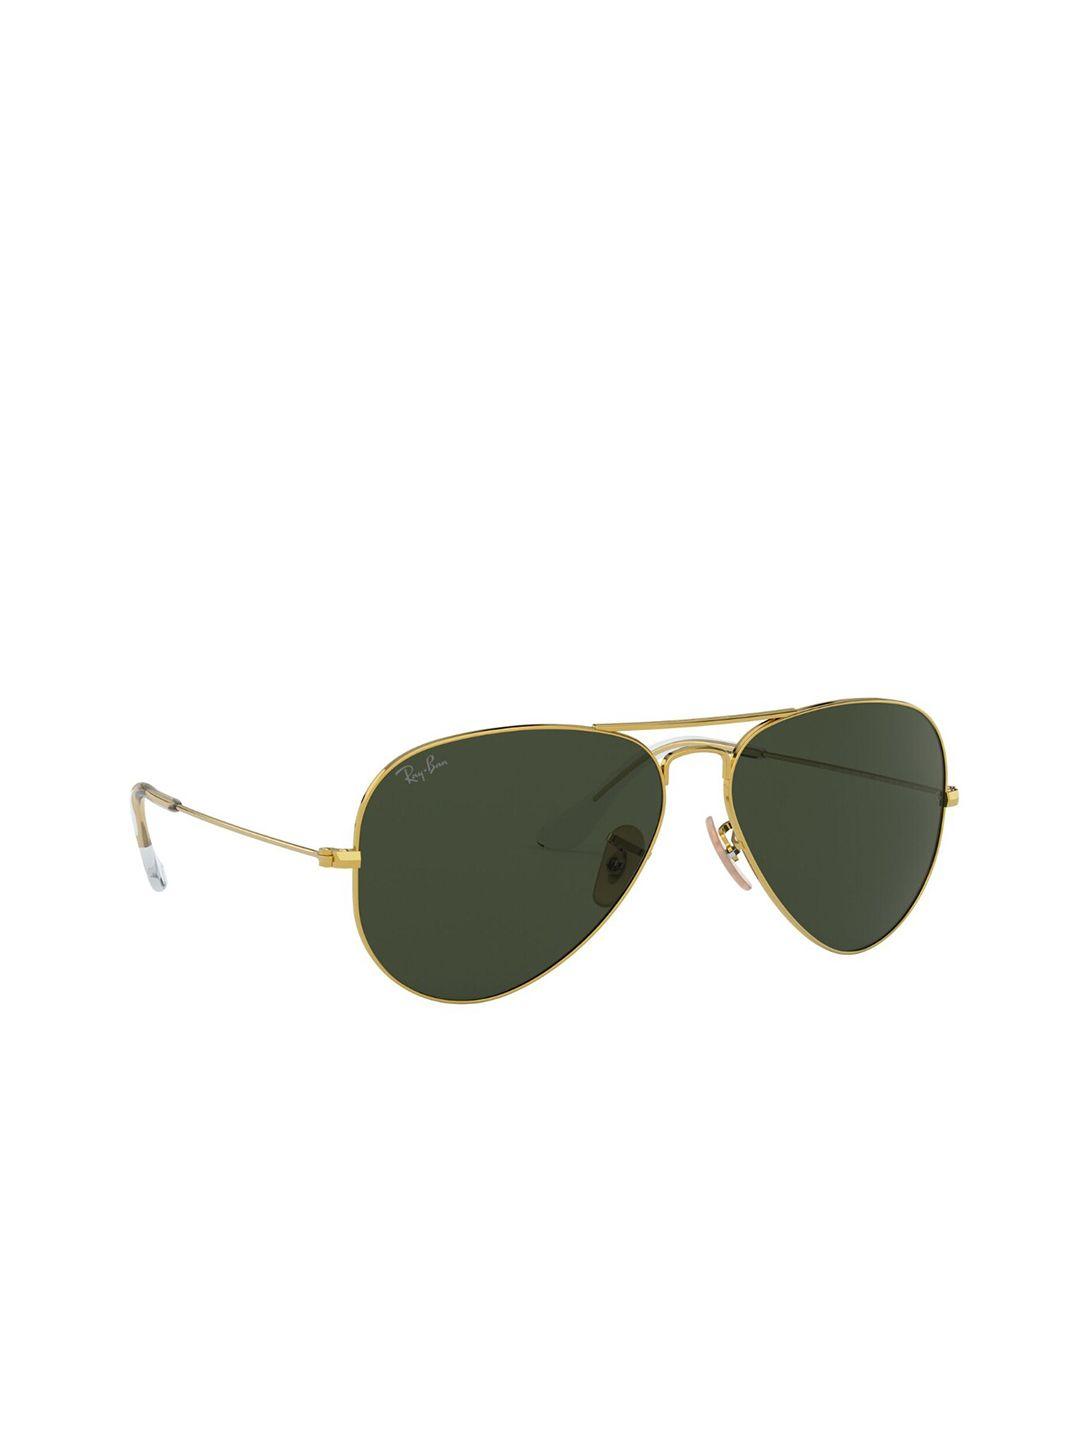 ray-ban-unisex-green-lens-&-gold-toned-uv-protected-aviator-sunglasses-8056597316675